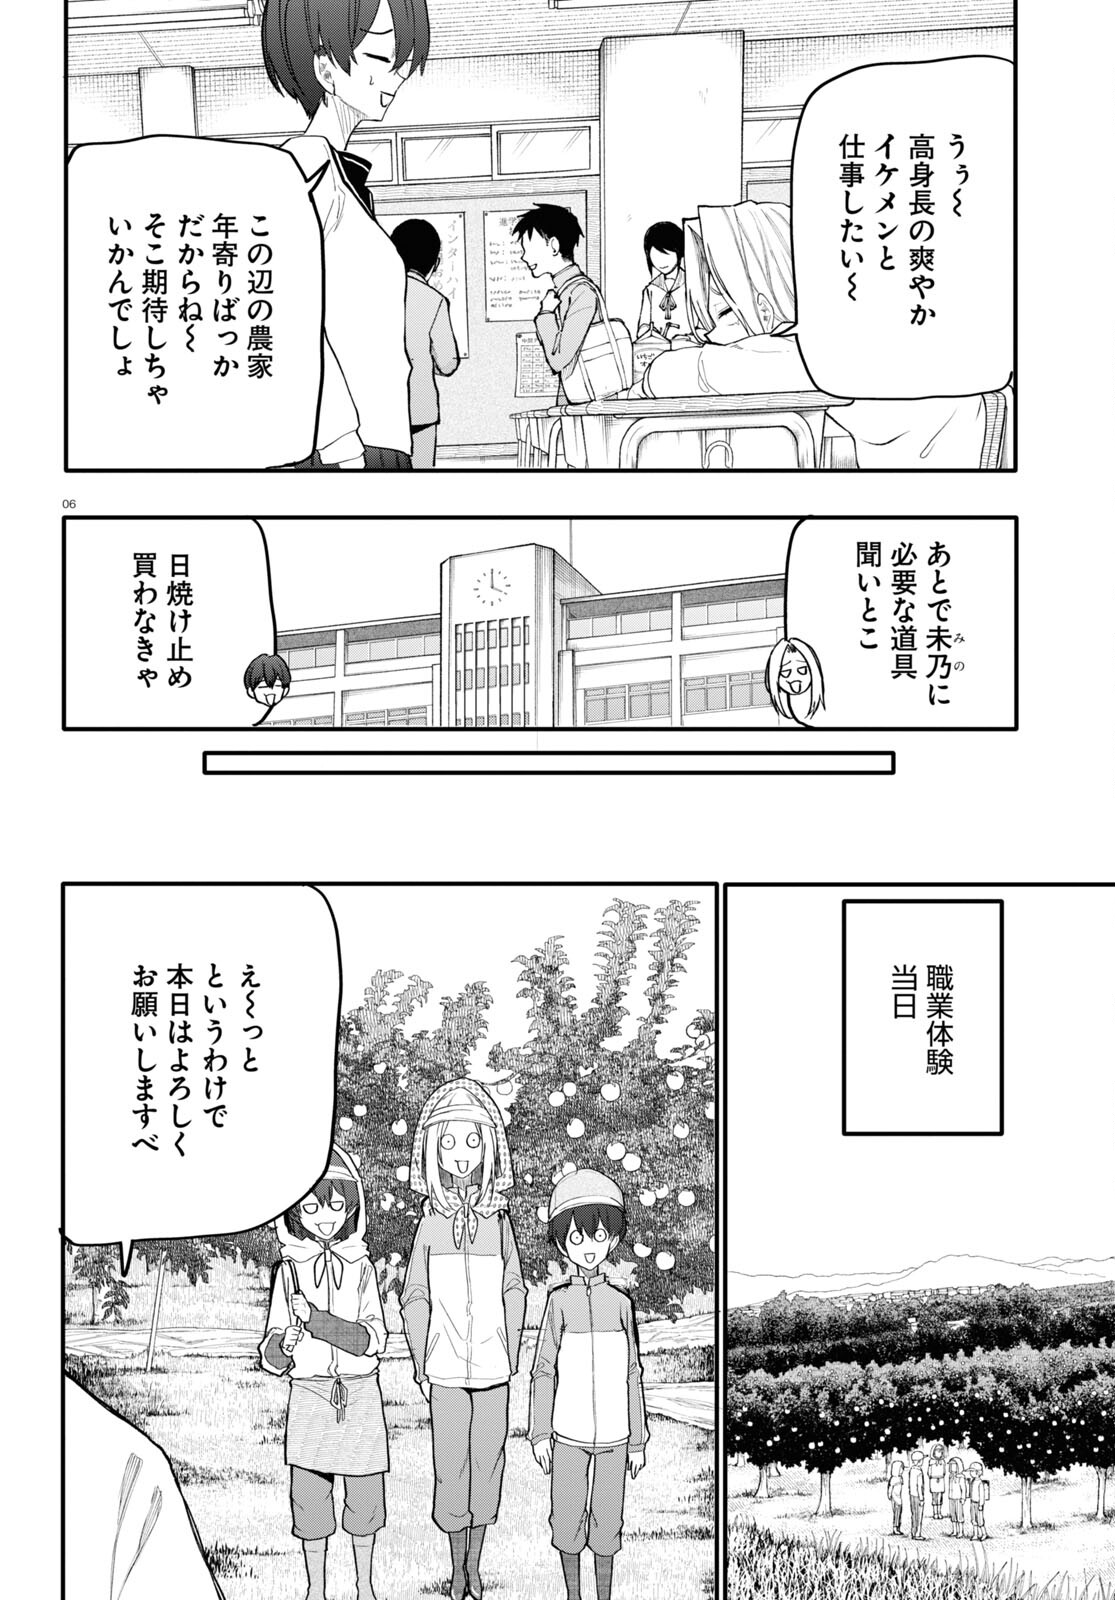 Ojii-san to Obaa-san ga Wakigaetta Hanashi - Chapter 176 - Page 2